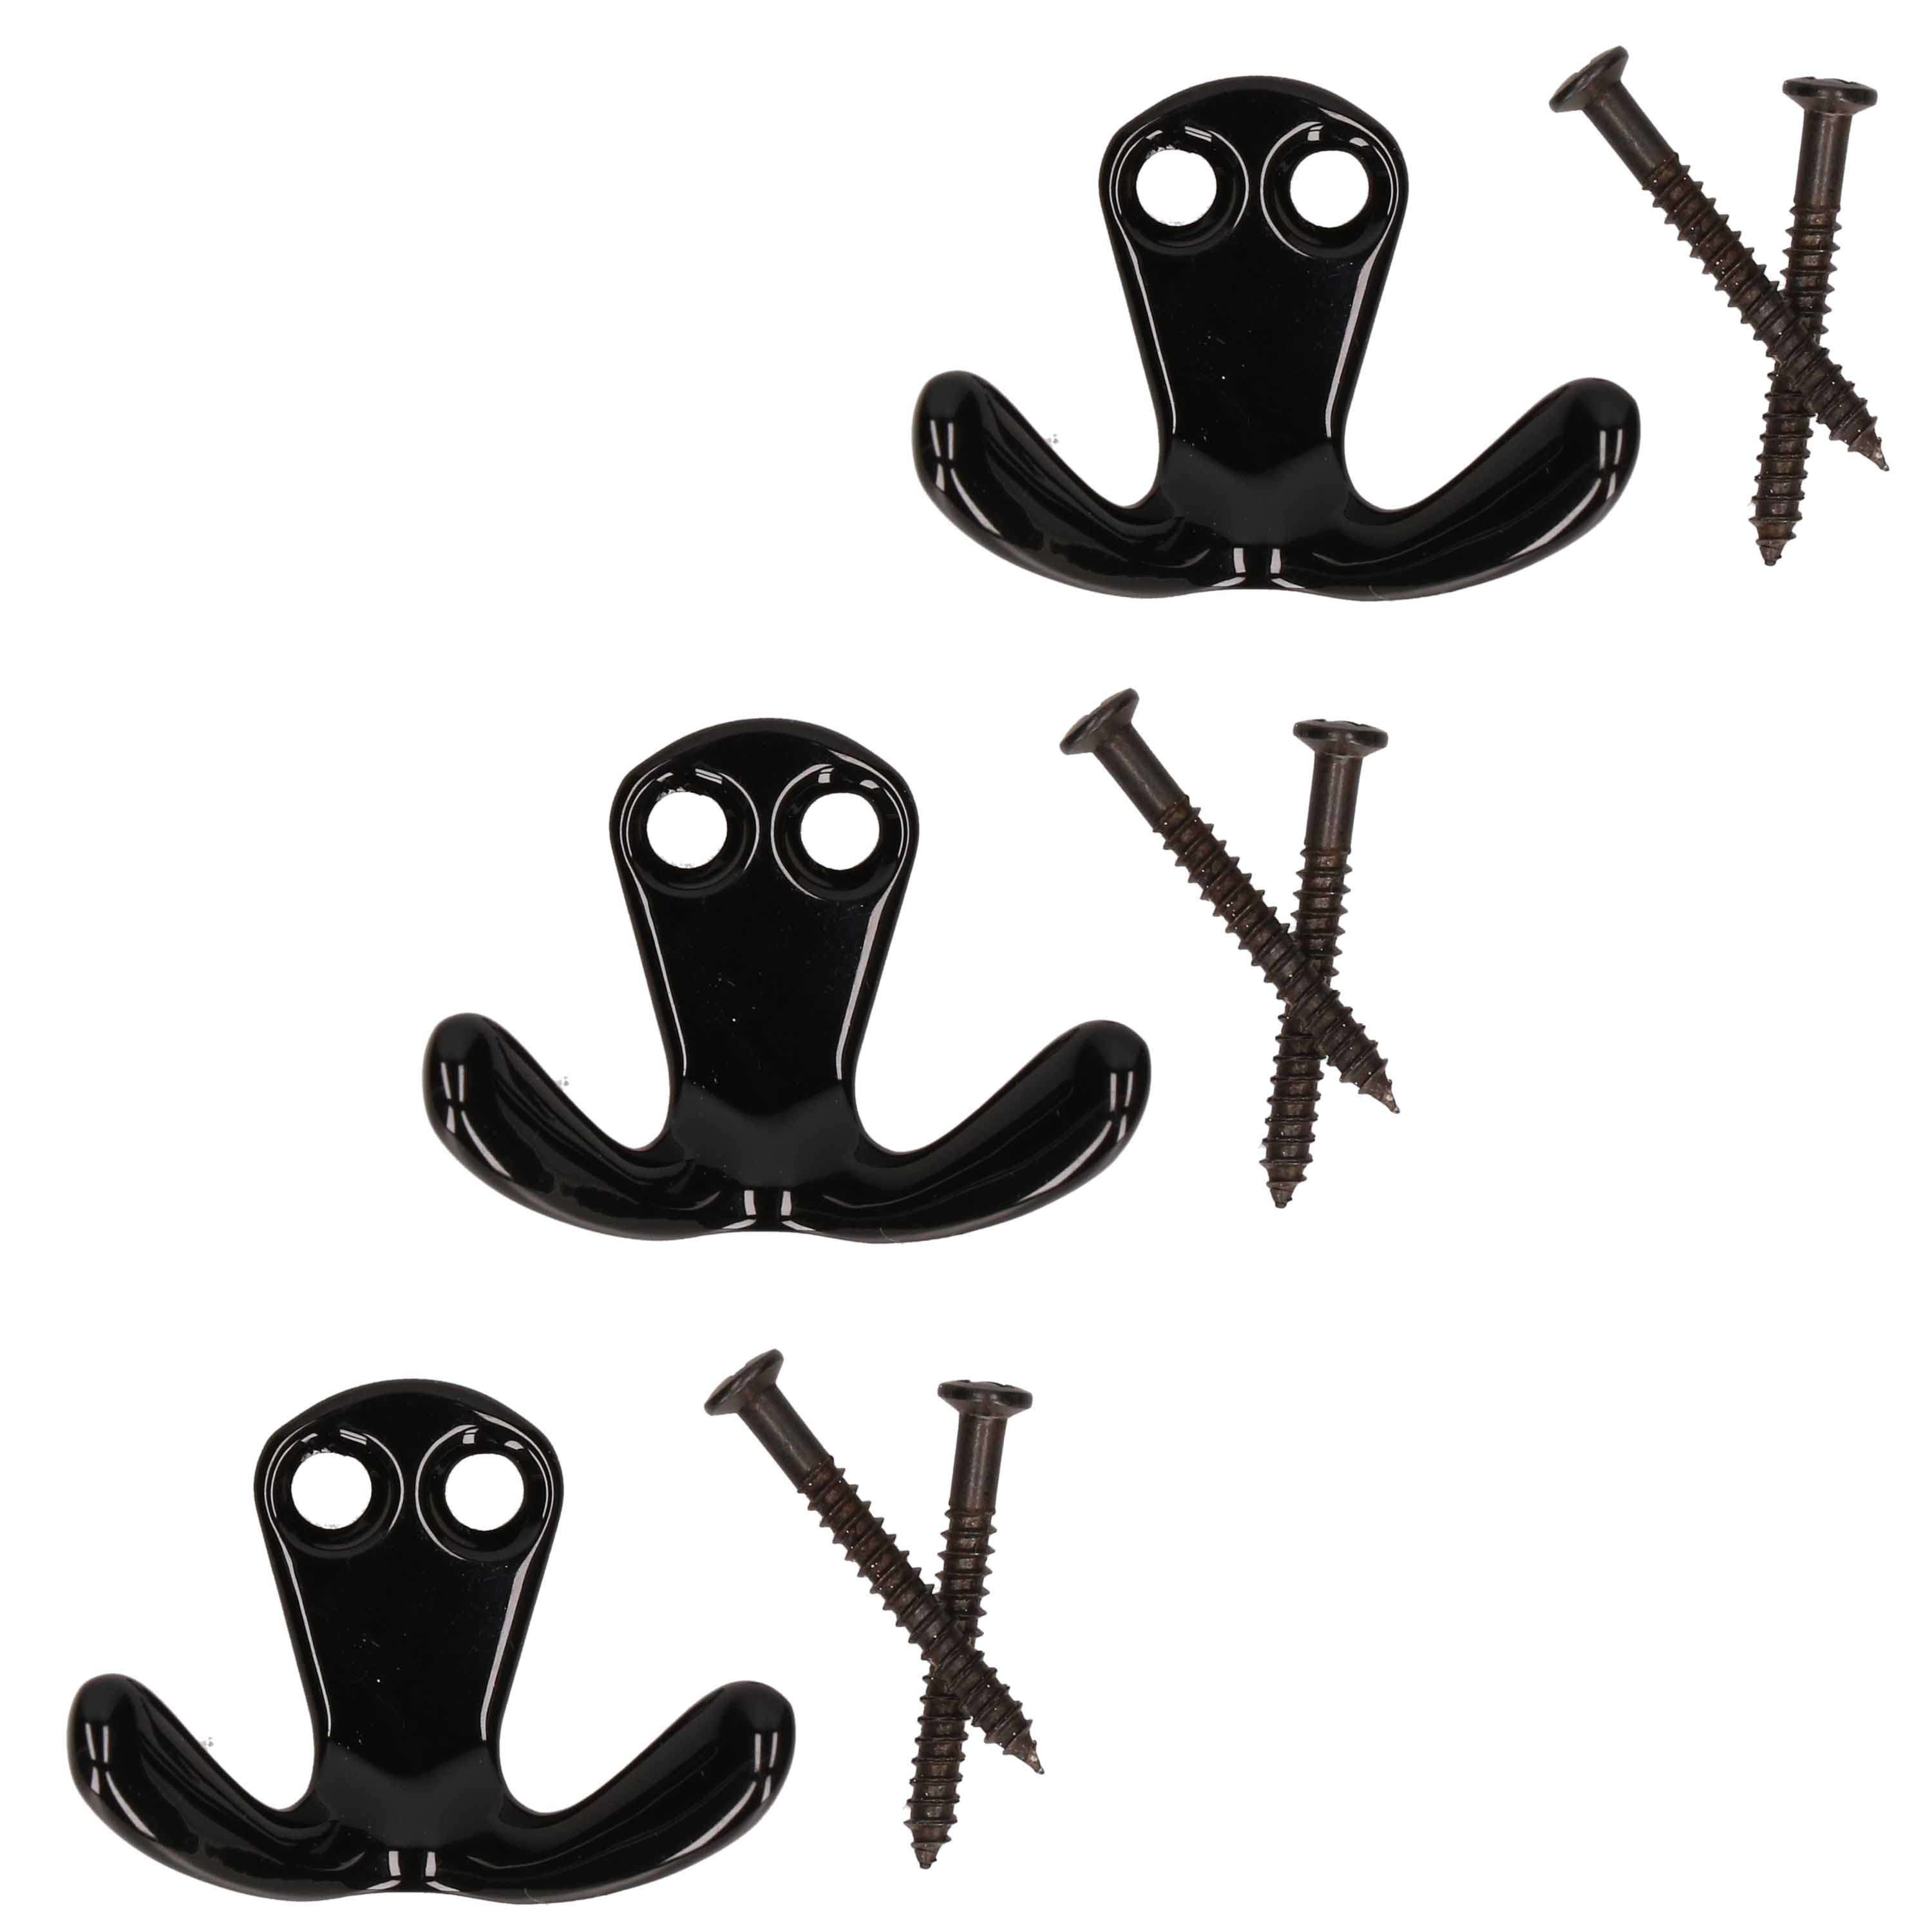 3x Luxe kapstokhaken-jashaken-kapstokhaakjes zwart van hoogwaardig metaal 2,2 x 3,3 cm